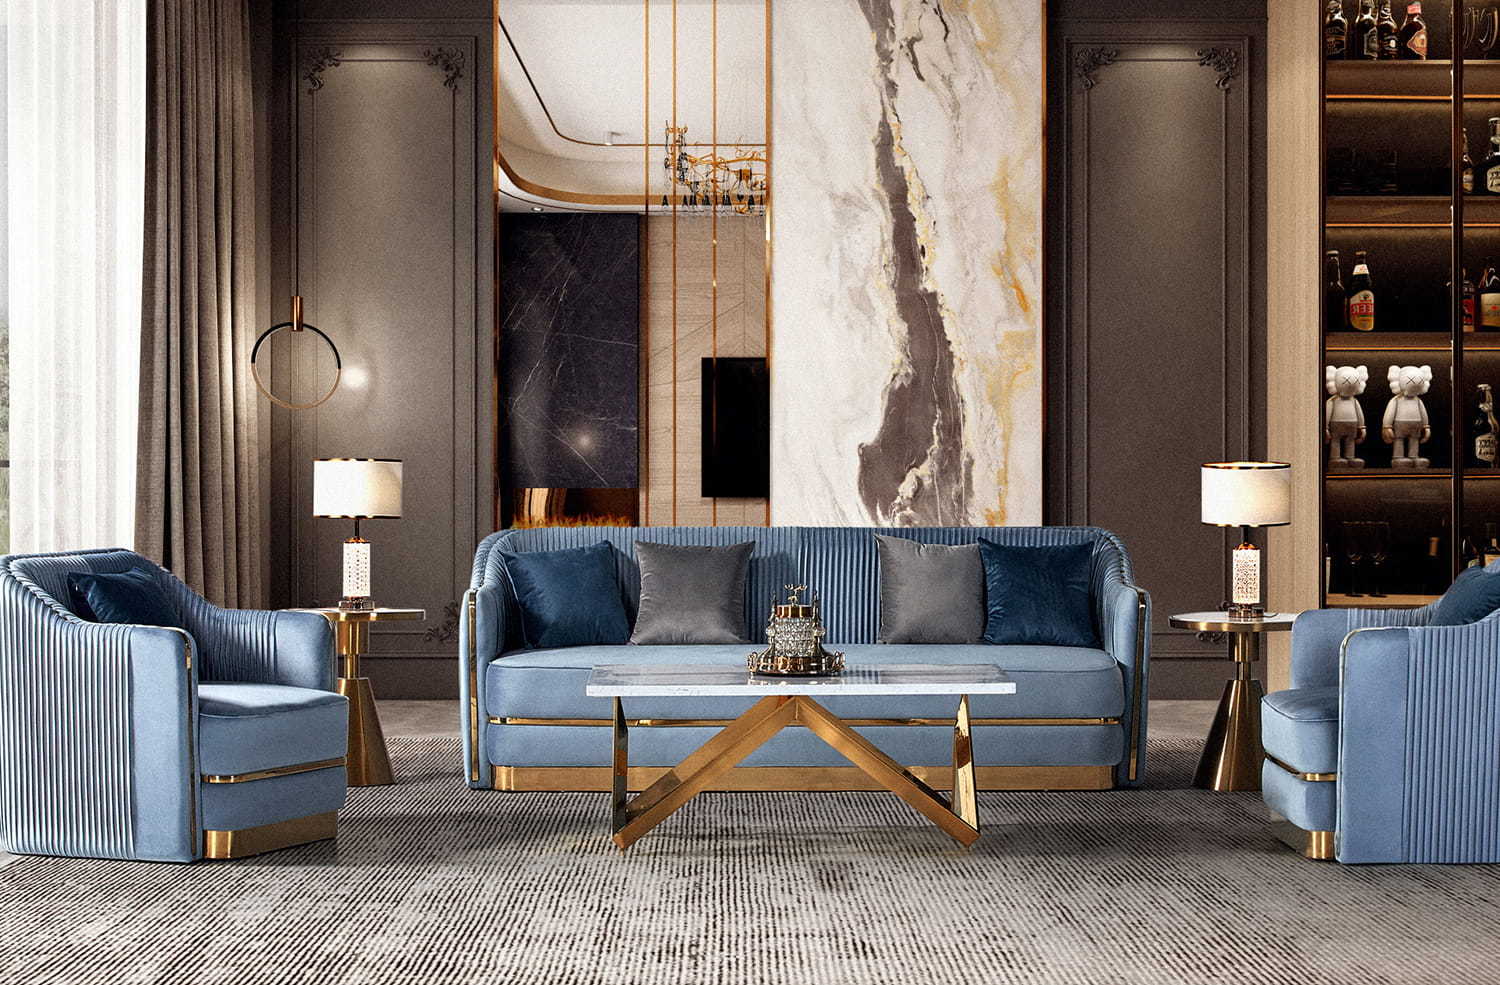 RJC-8221 Modern elegant upholstery stackable blue velvet with metal base living room sofa couches